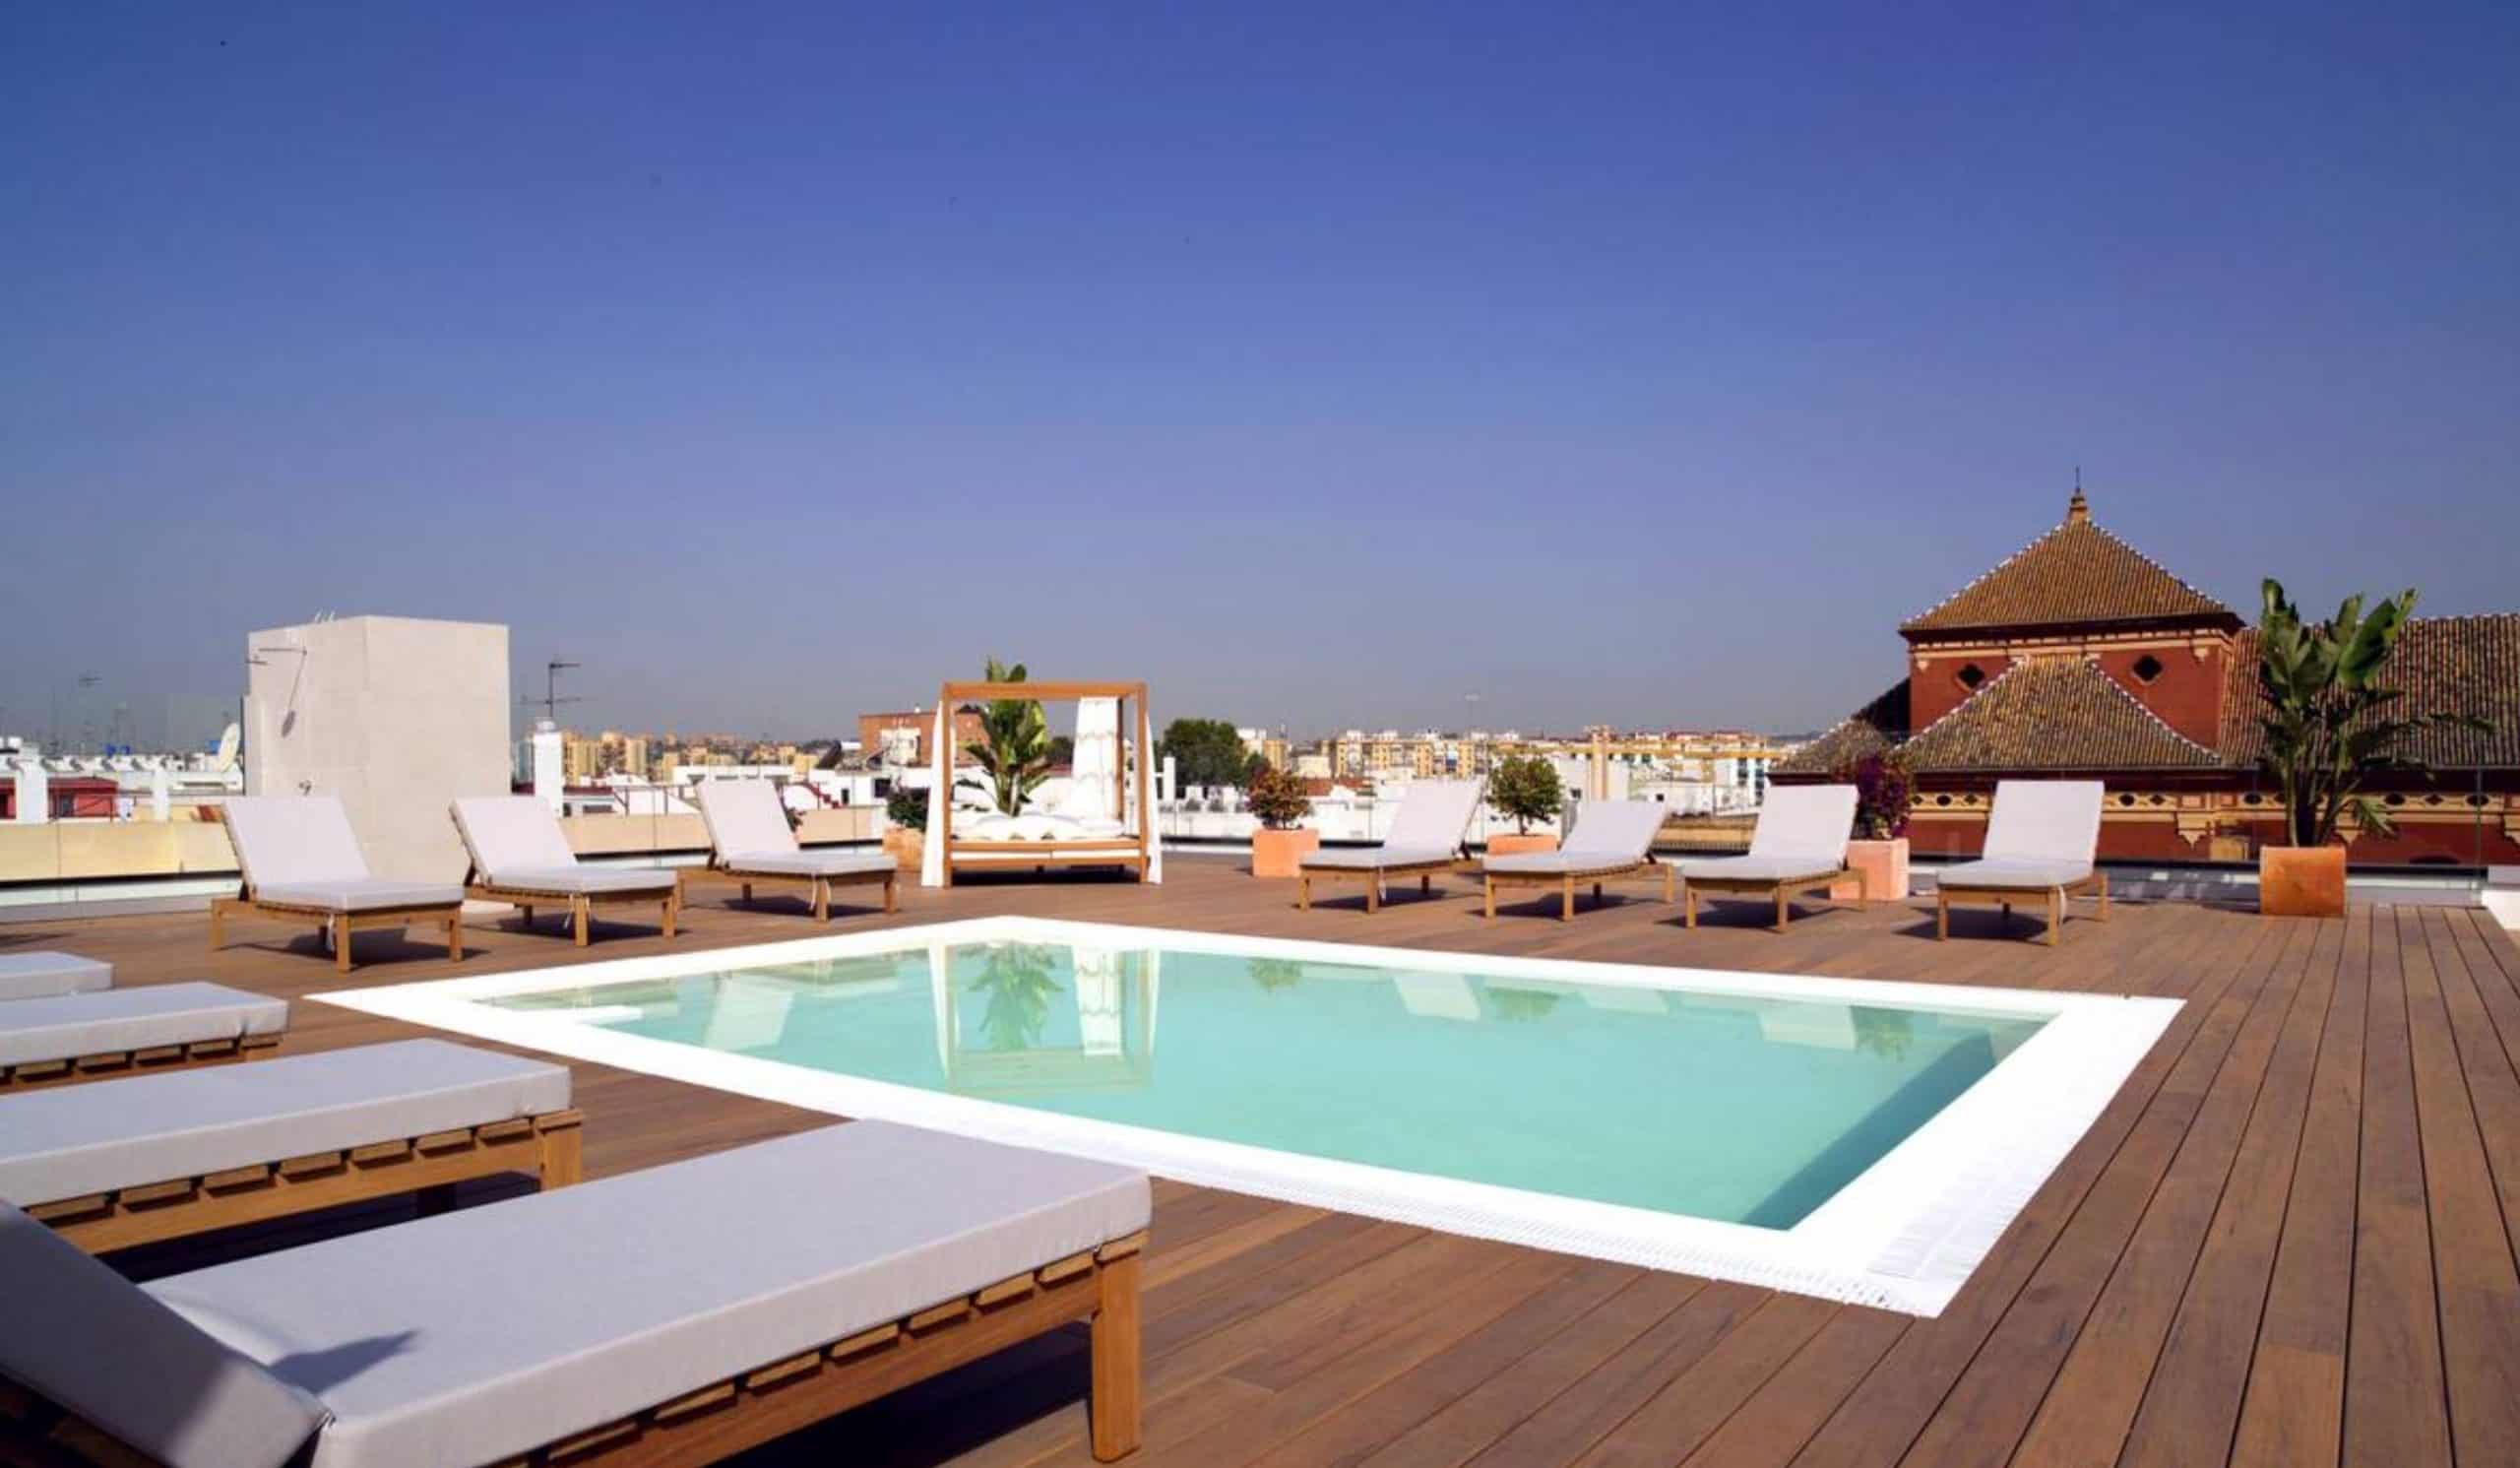 zenit hotel sevilla scaled - Let's Visit Southern Spain